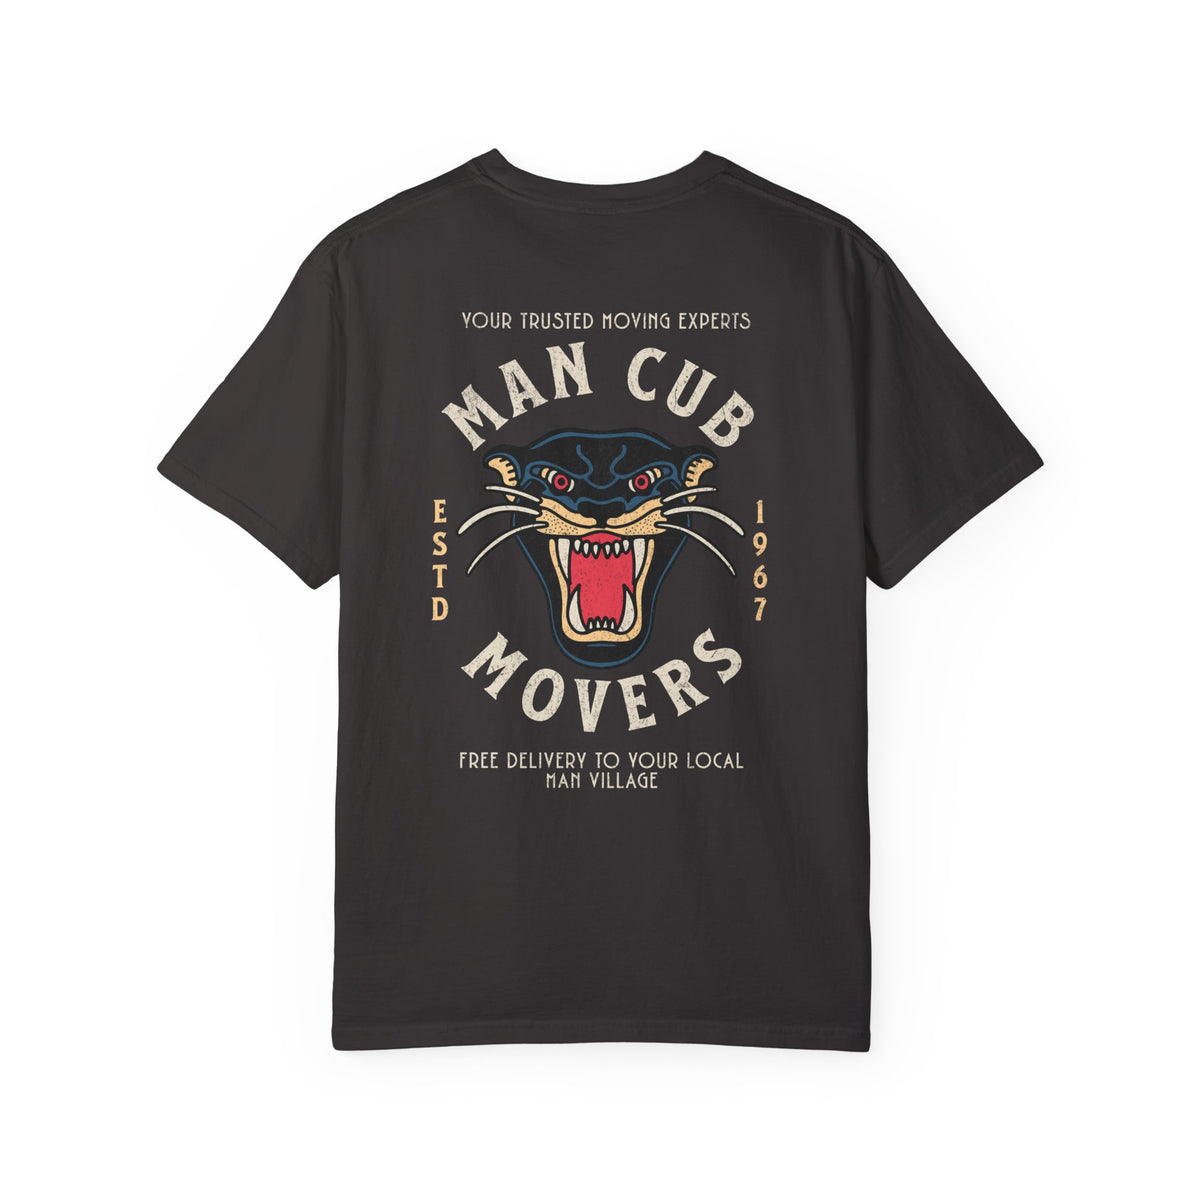 Man Cub Movers Comfort Colors Unisex Garment-Dyed T-shirt